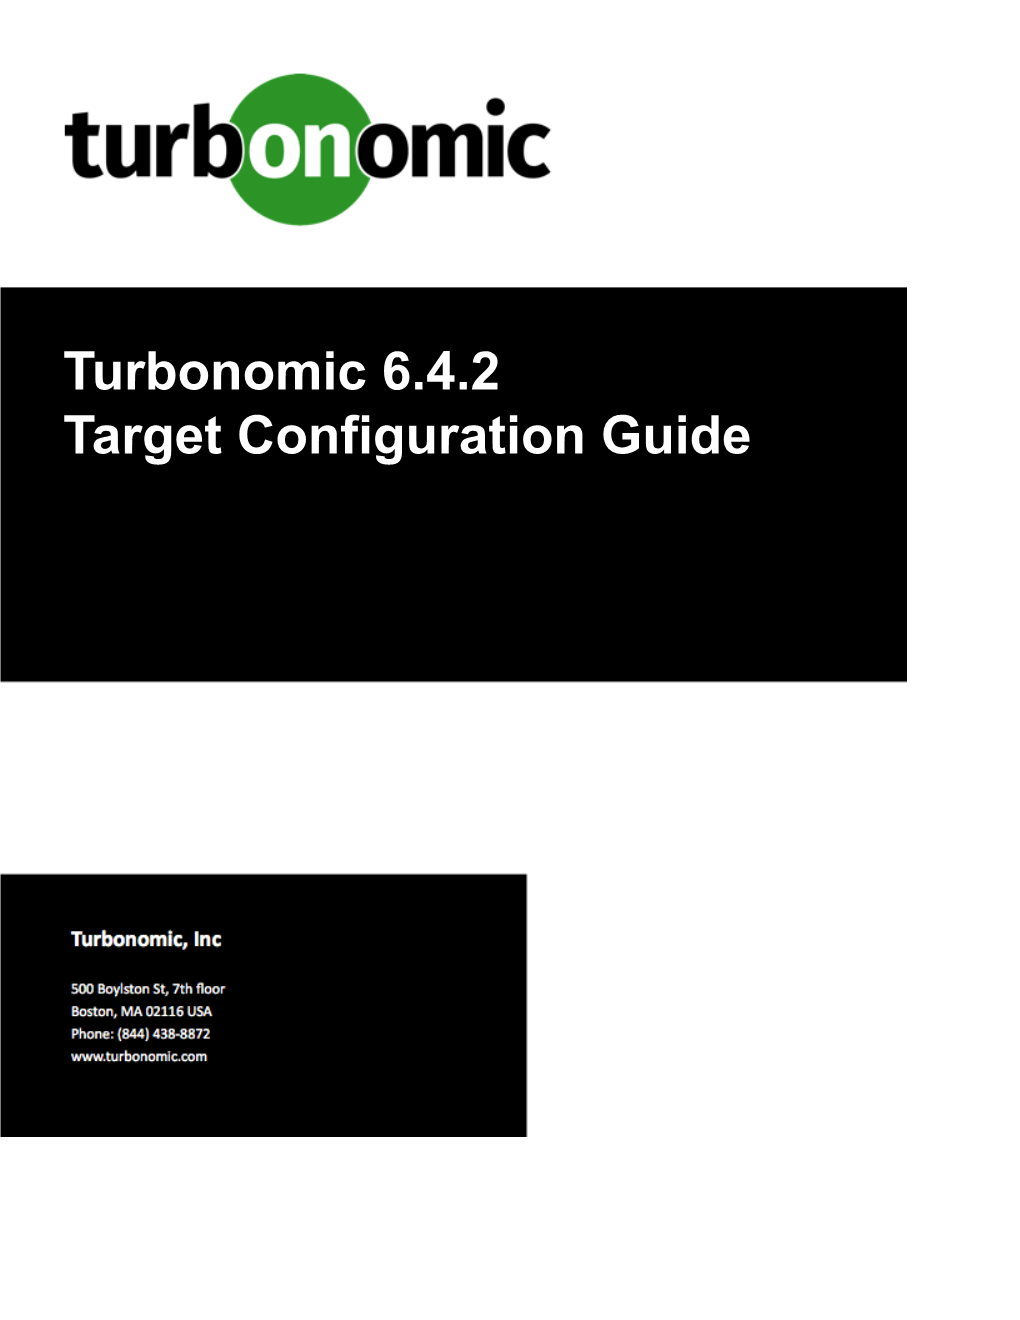 Turbonomic 6.4.2 Target Configuration Guide